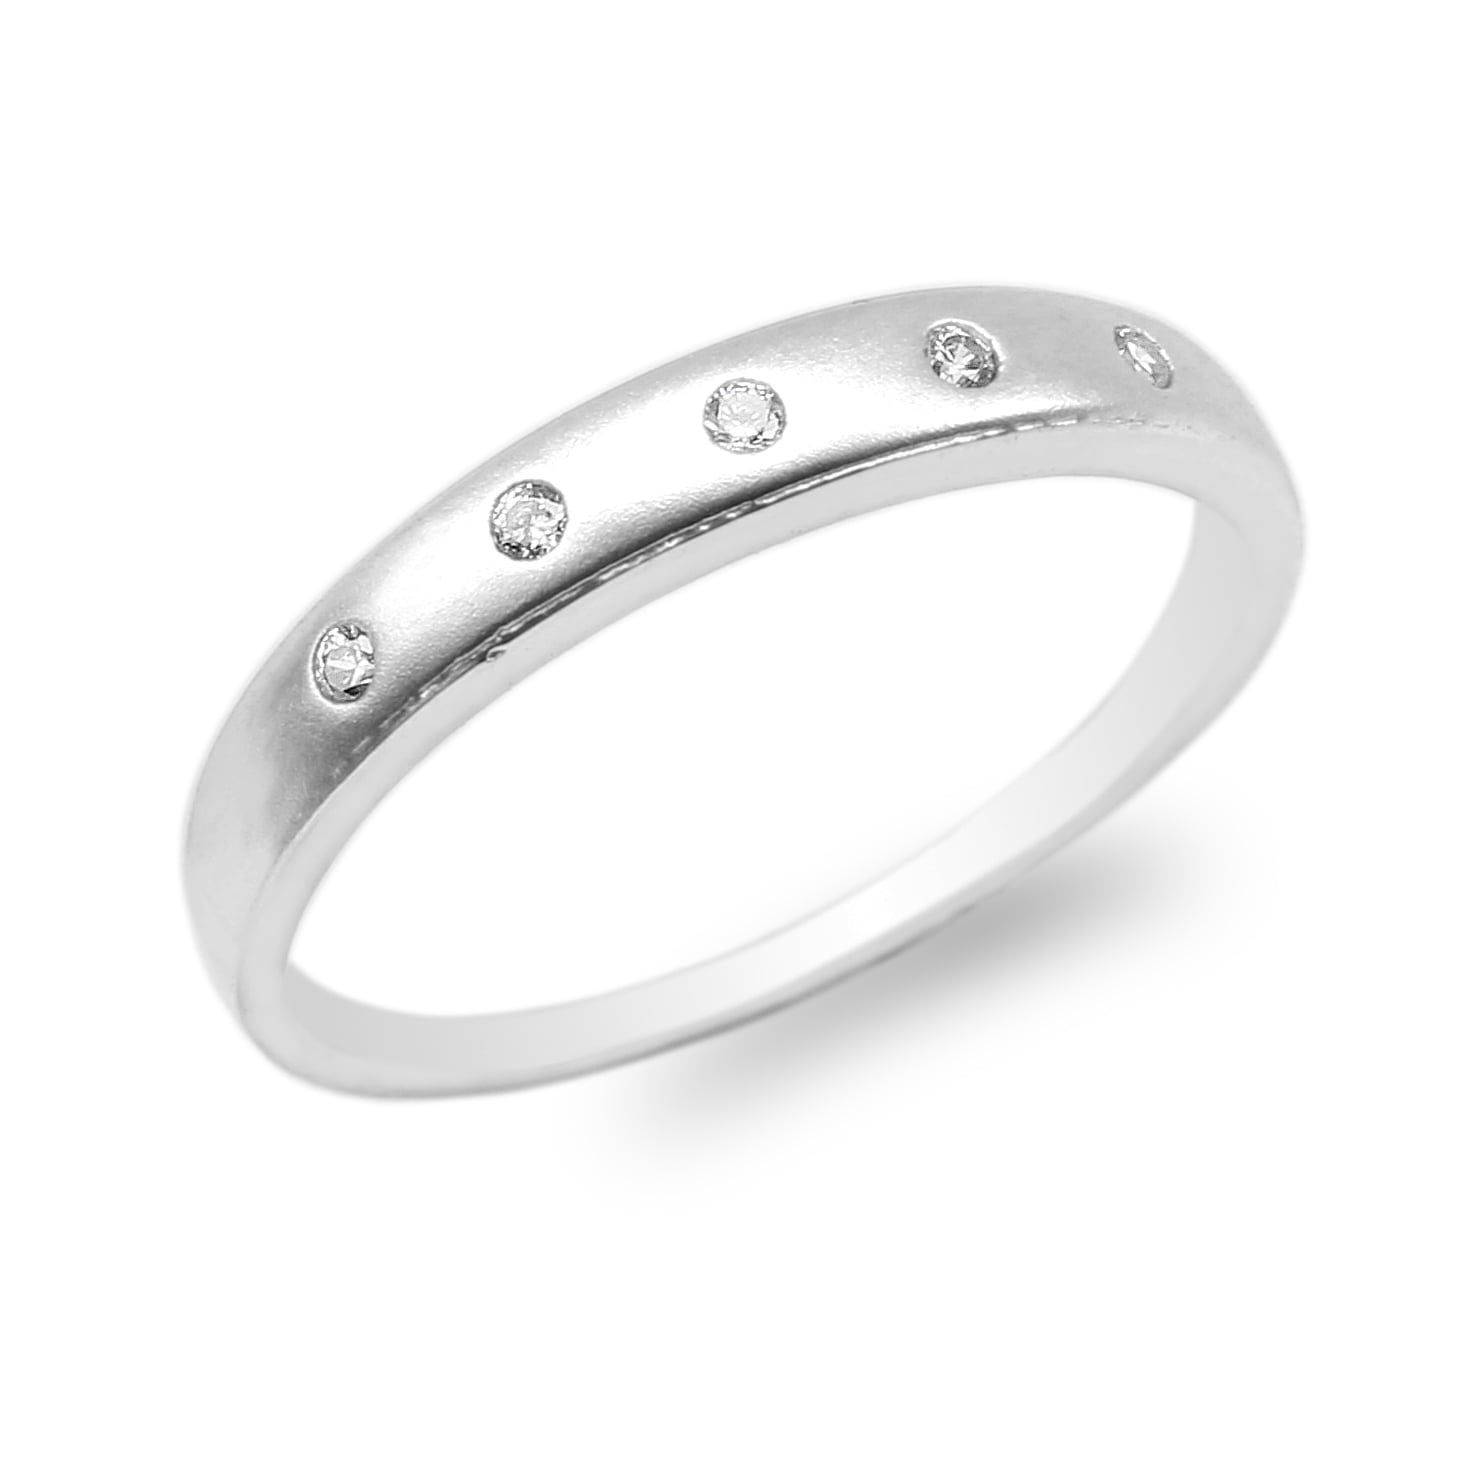 Details about   White Round CZ 925 Sterling Silver Wedding Extravagant Western Women Ring 11